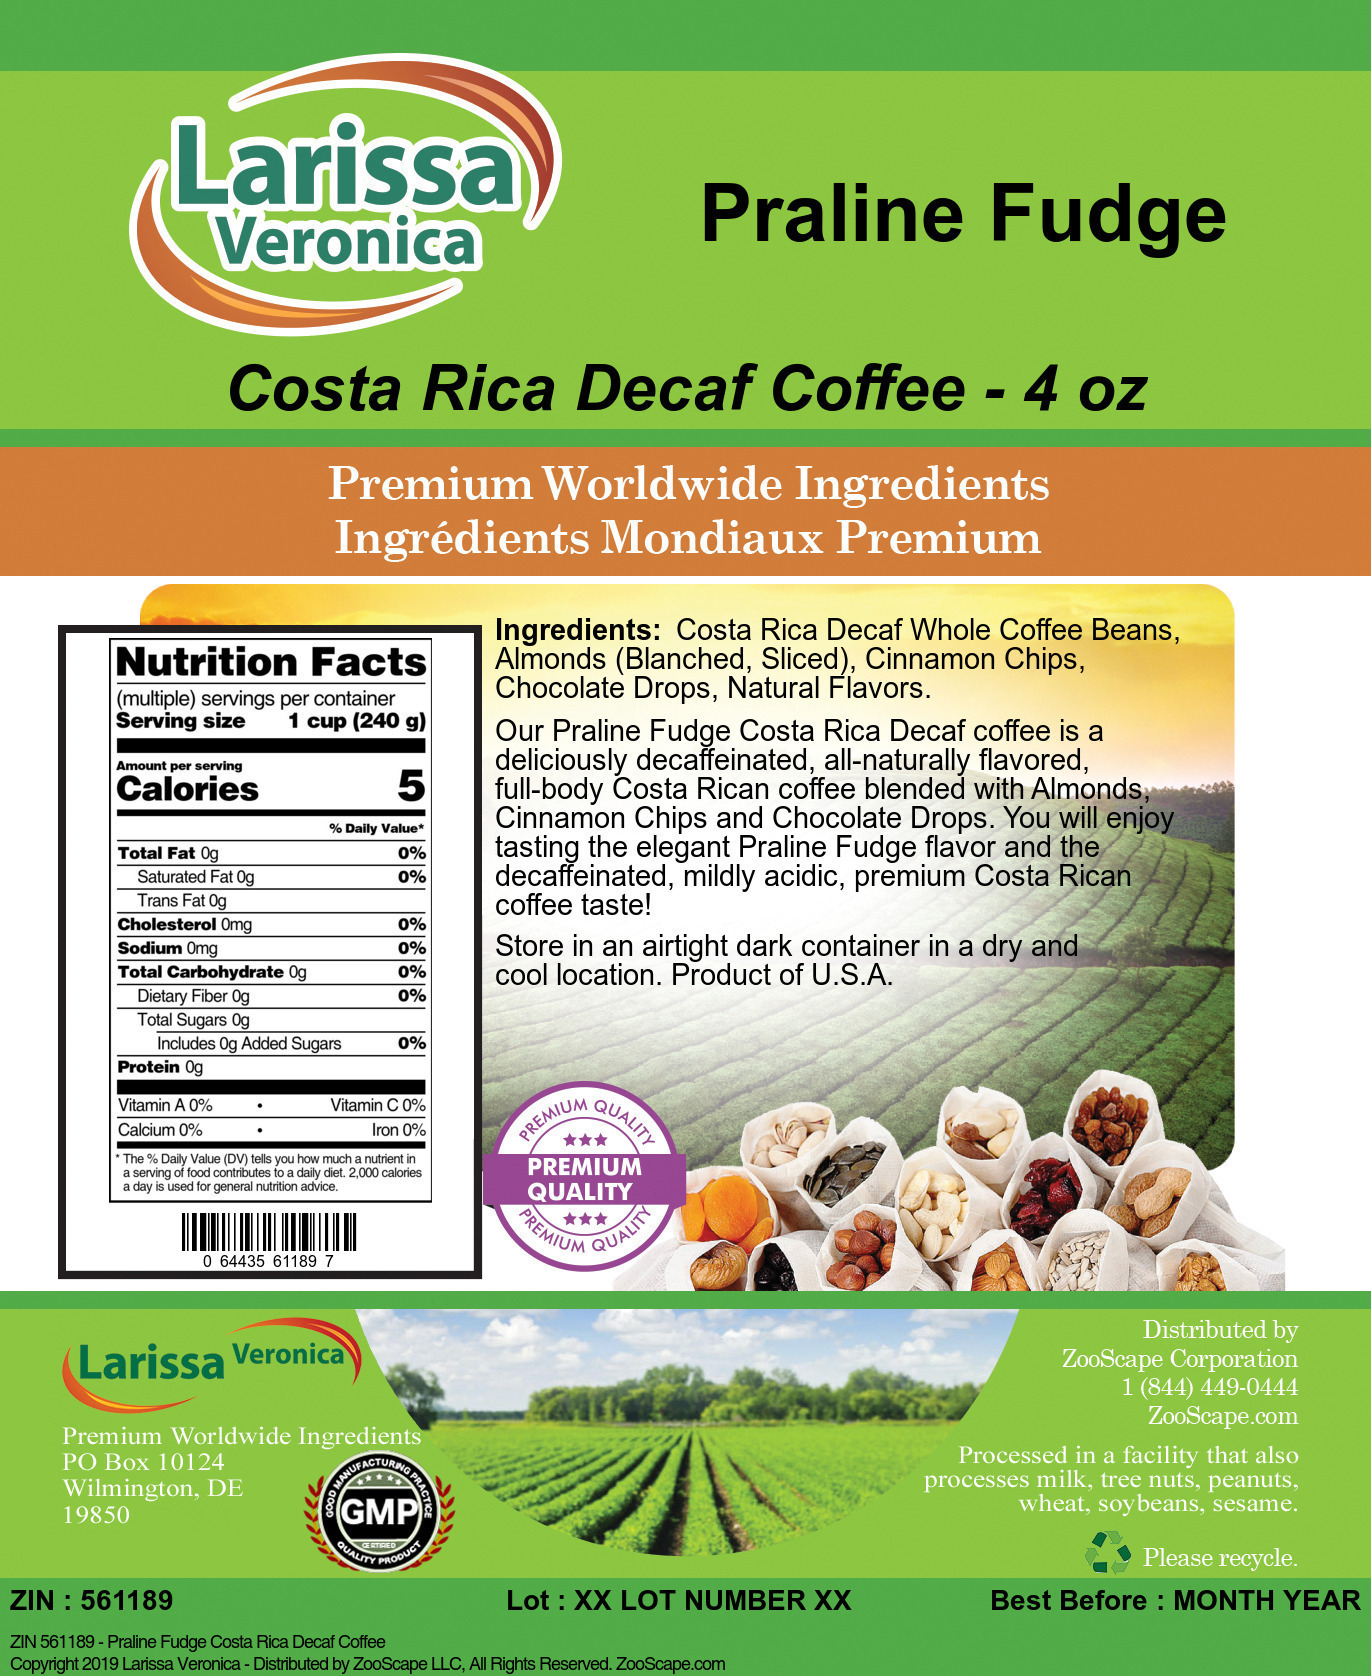 Praline Fudge Costa Rica Decaf Coffee - Label